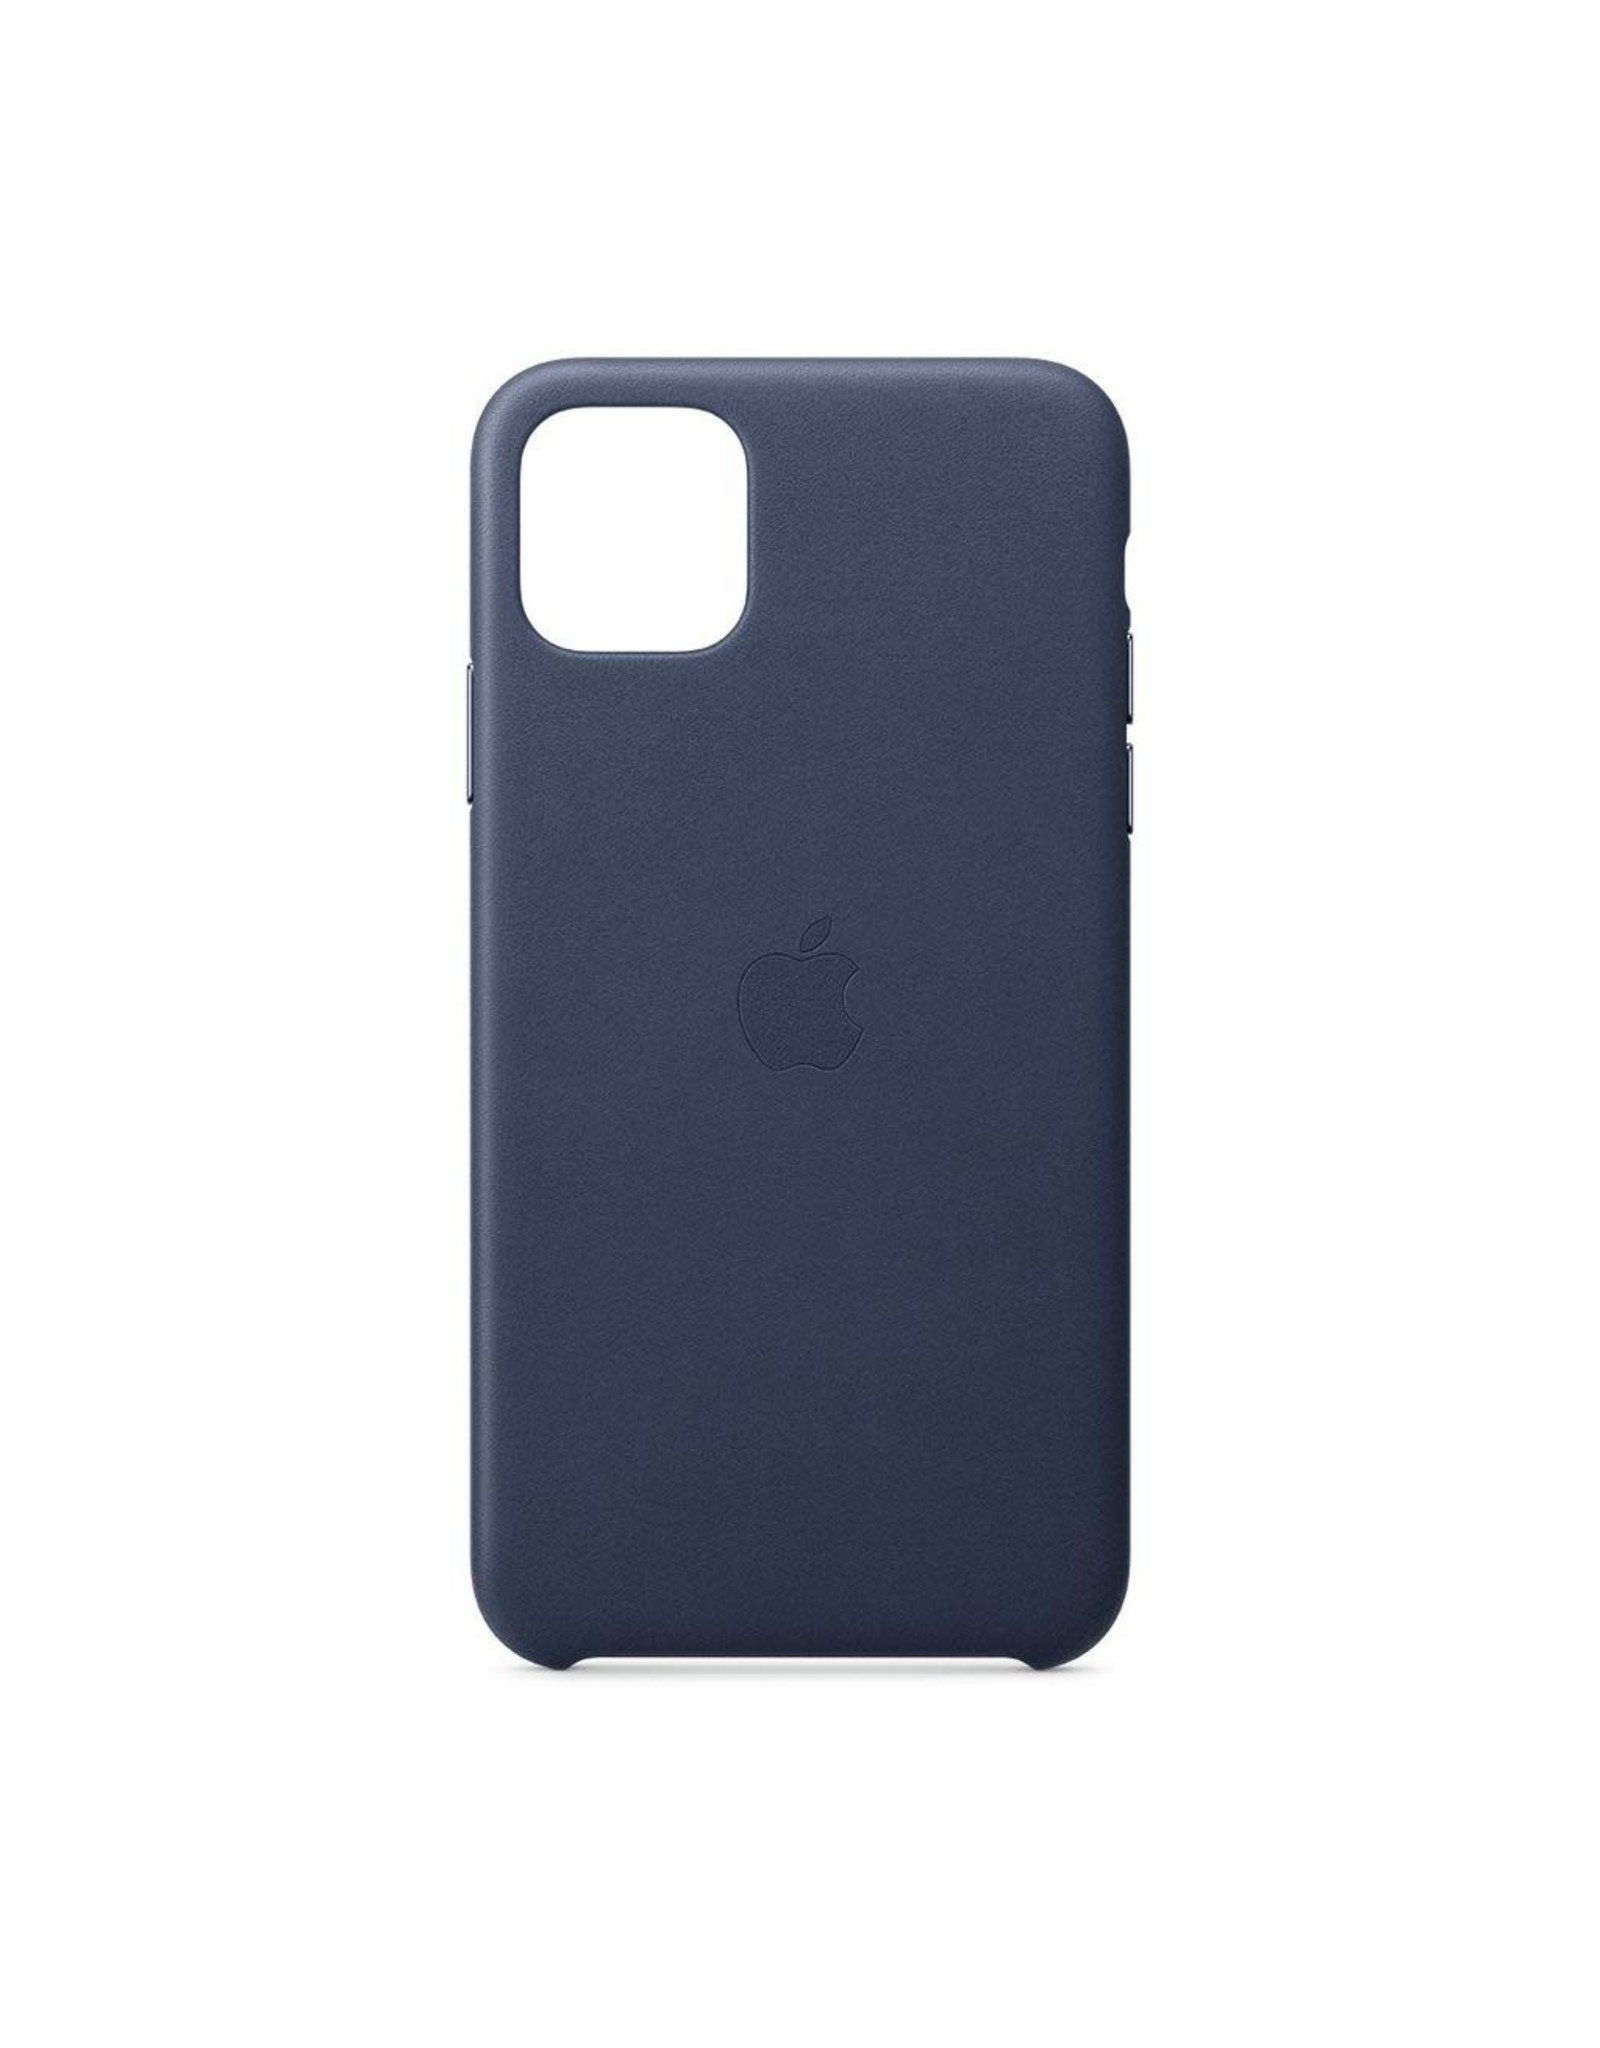 Apple Apple iPhone 11 Pro Max Leather Case - MIDNIGHT BLUE